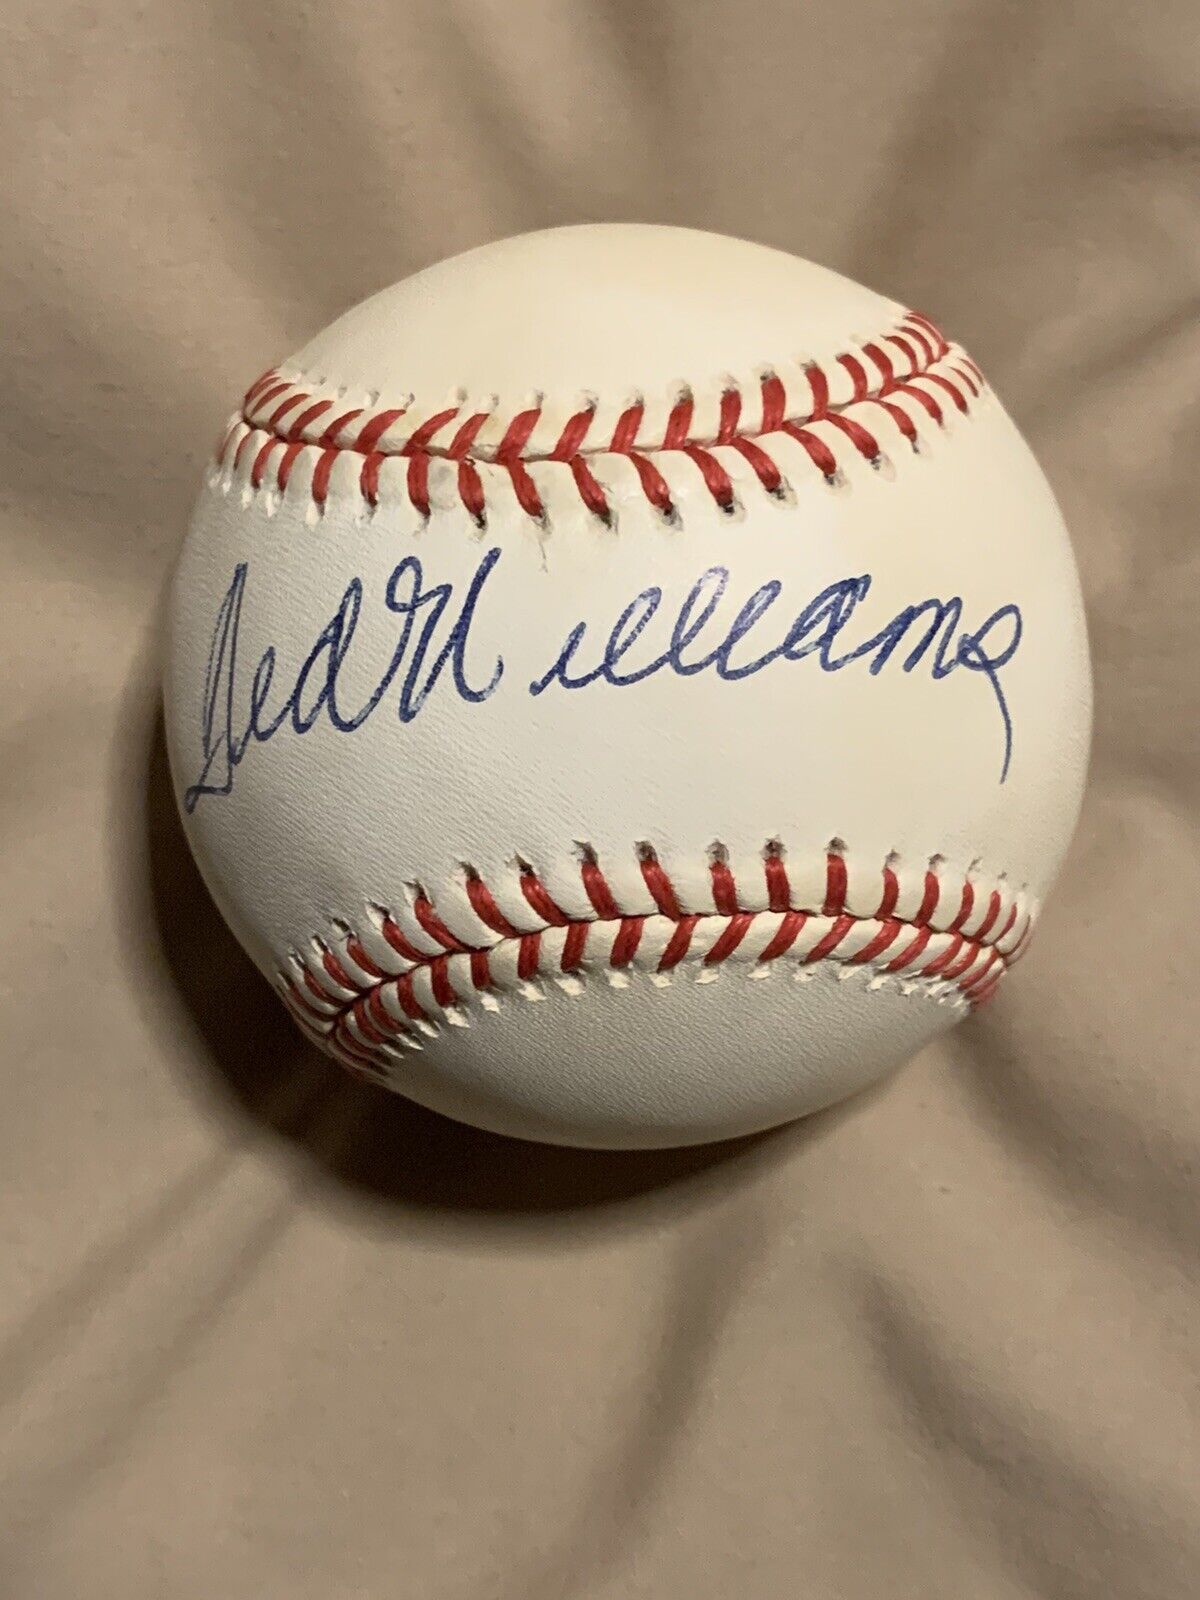 ted williams autographed baseball